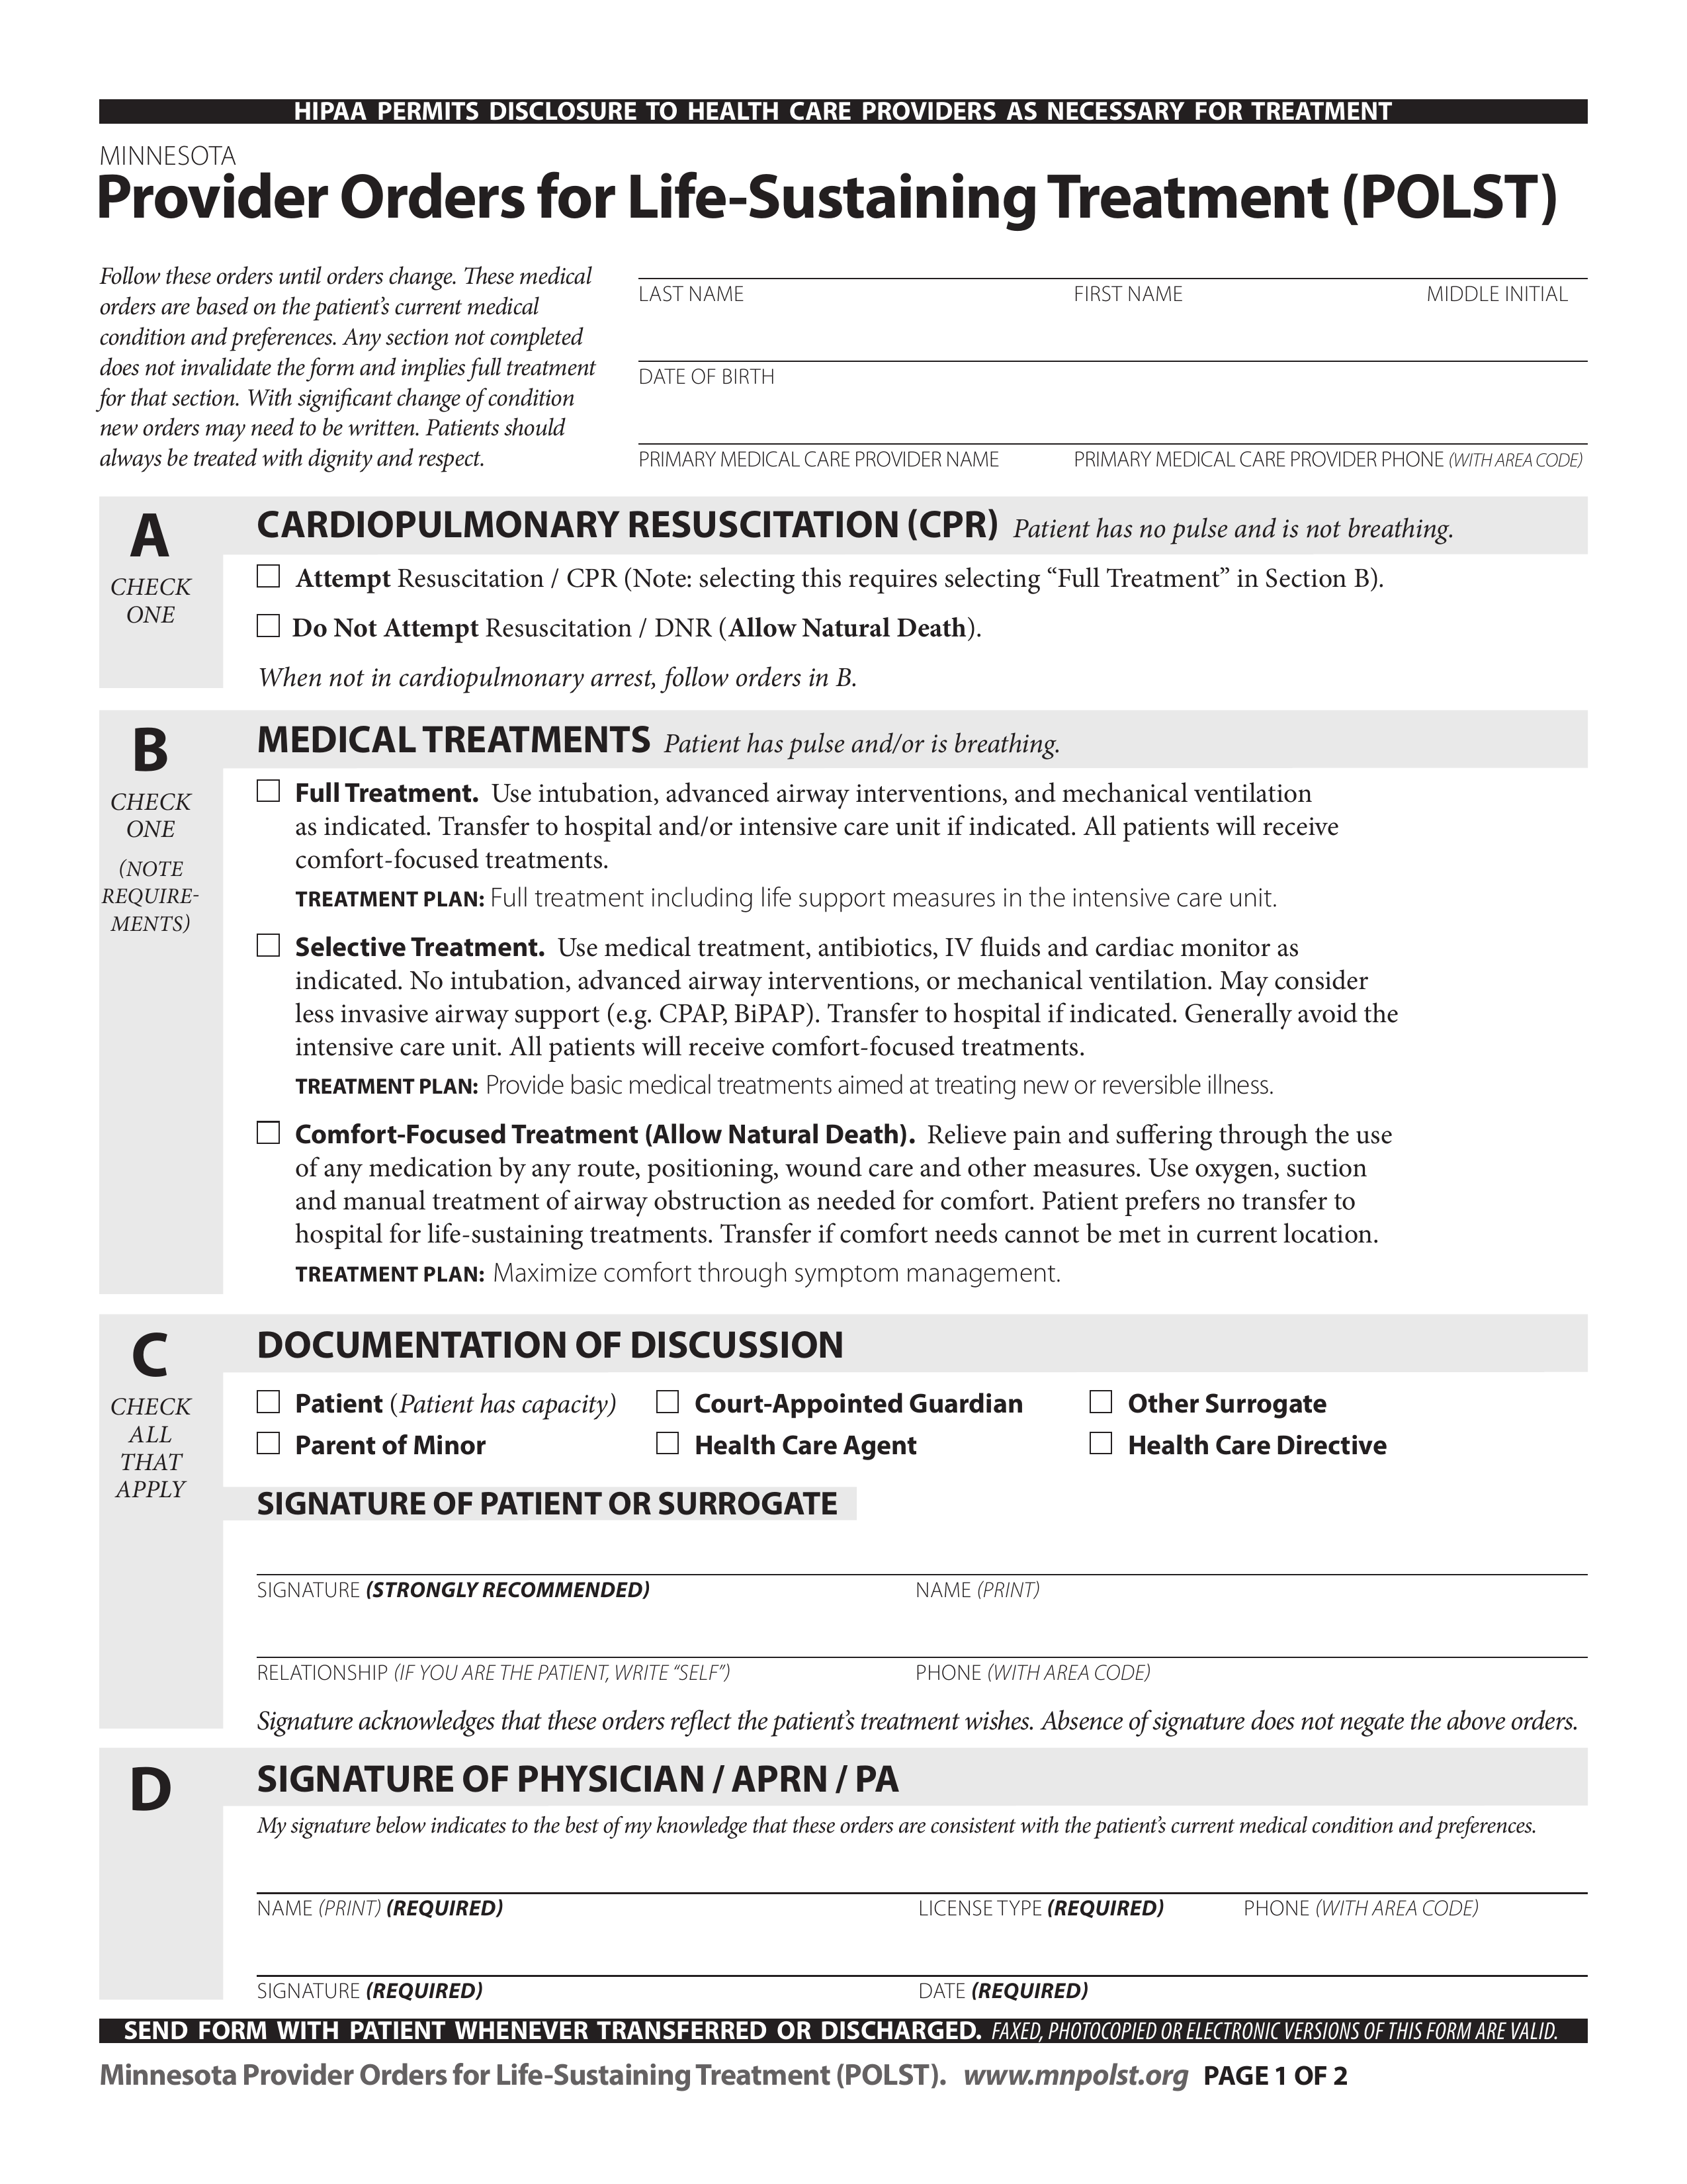 Minnesota Do Not Resuscitate (DNR) Order Form